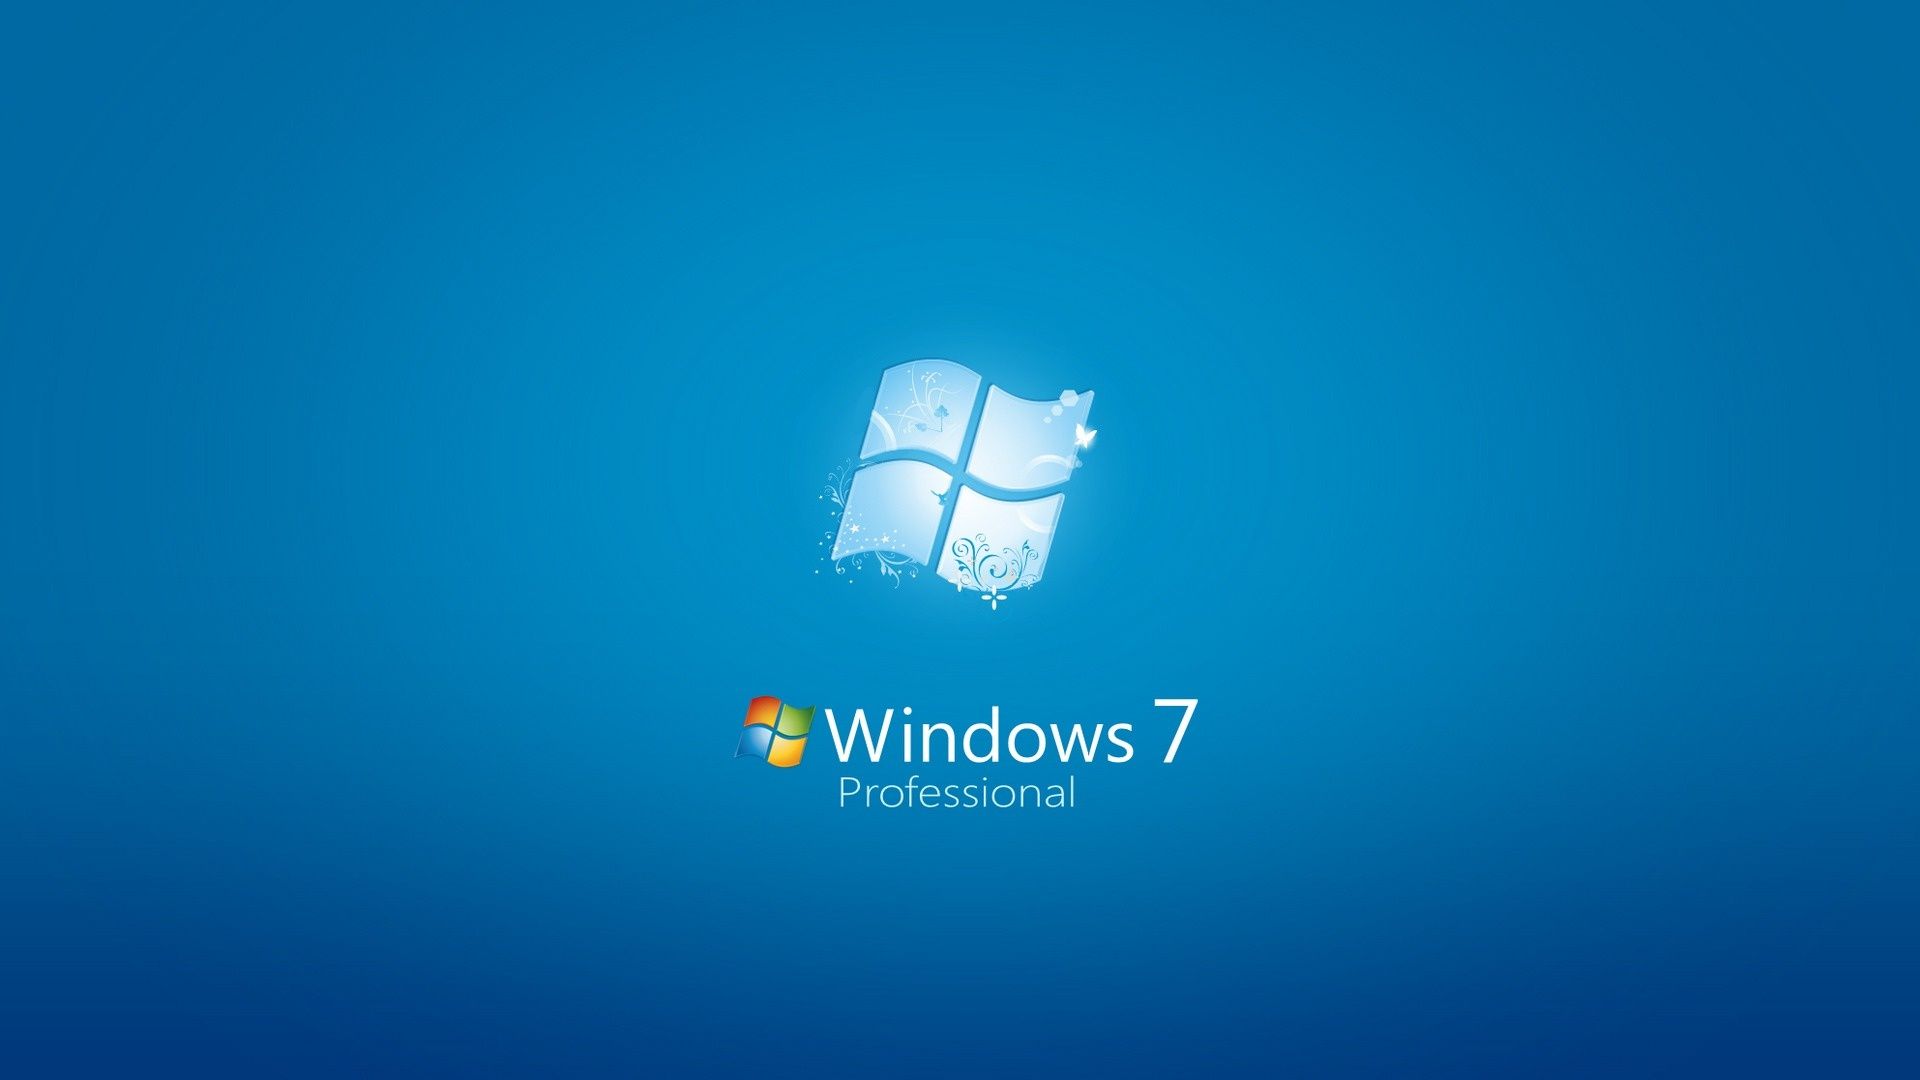 Windows Professional Art Logo HD Image Puters